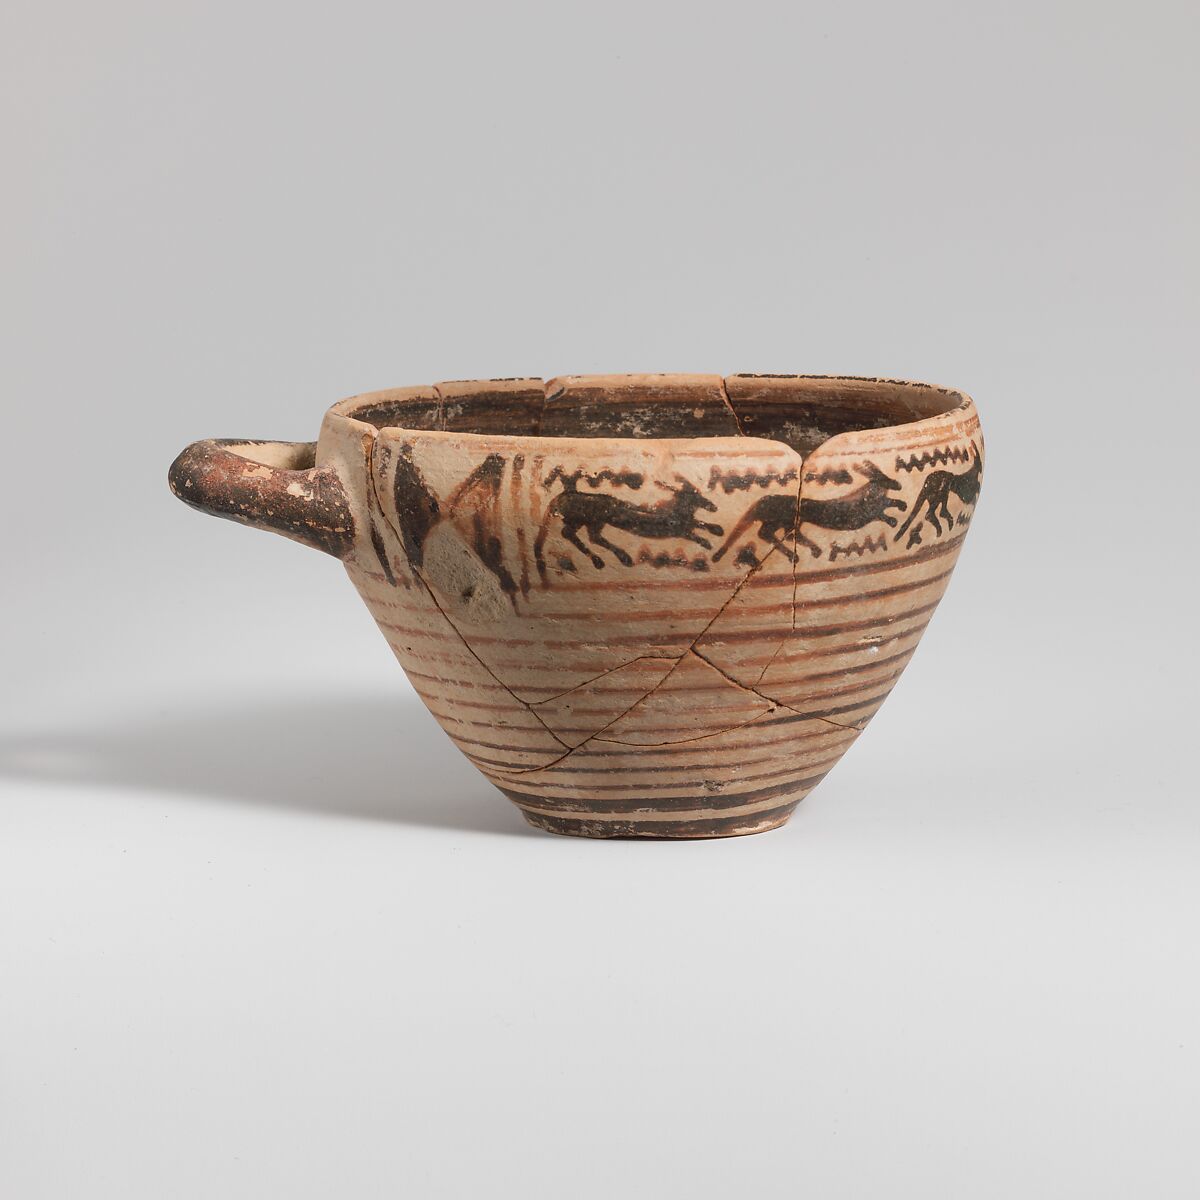 Terracotta one-handled skyphos (deep drinking cup), Terracotta, Greek, possibly Boeotian 